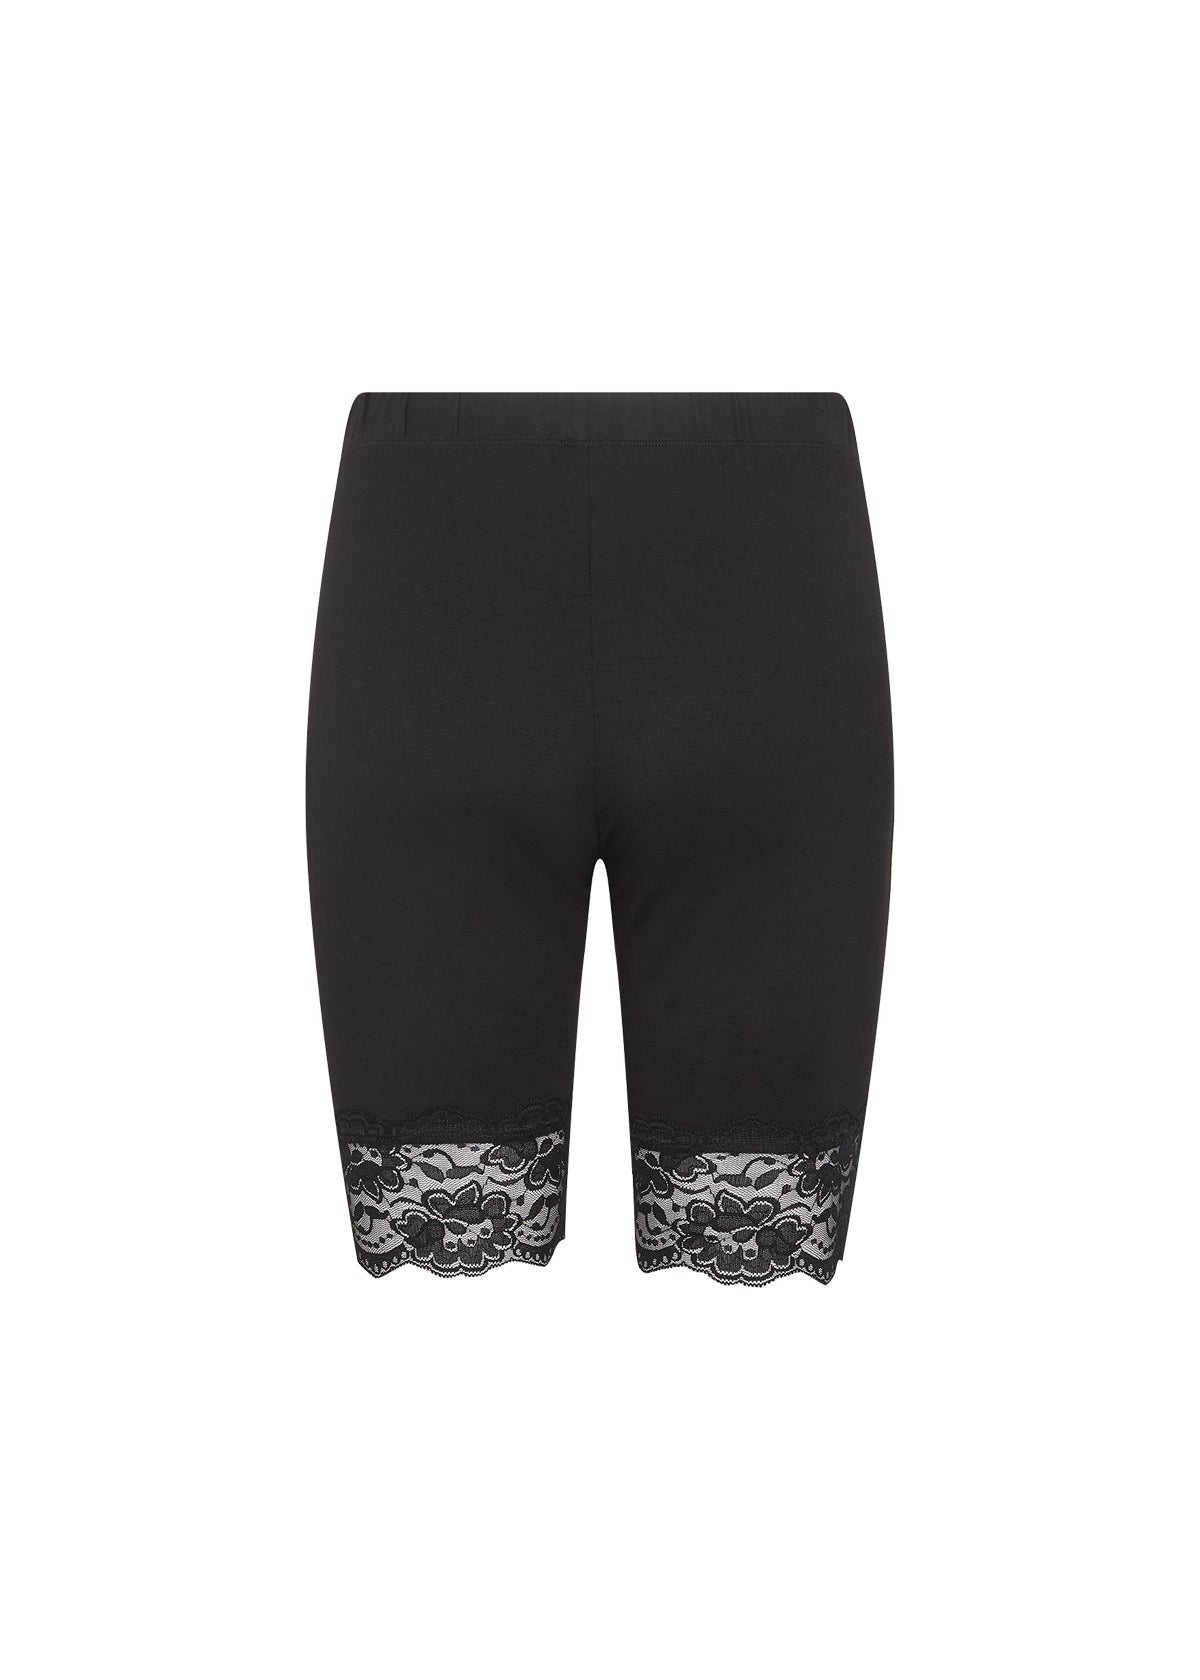 SOYA CONCEPT Marica 268 Black Lace Biker Shorts